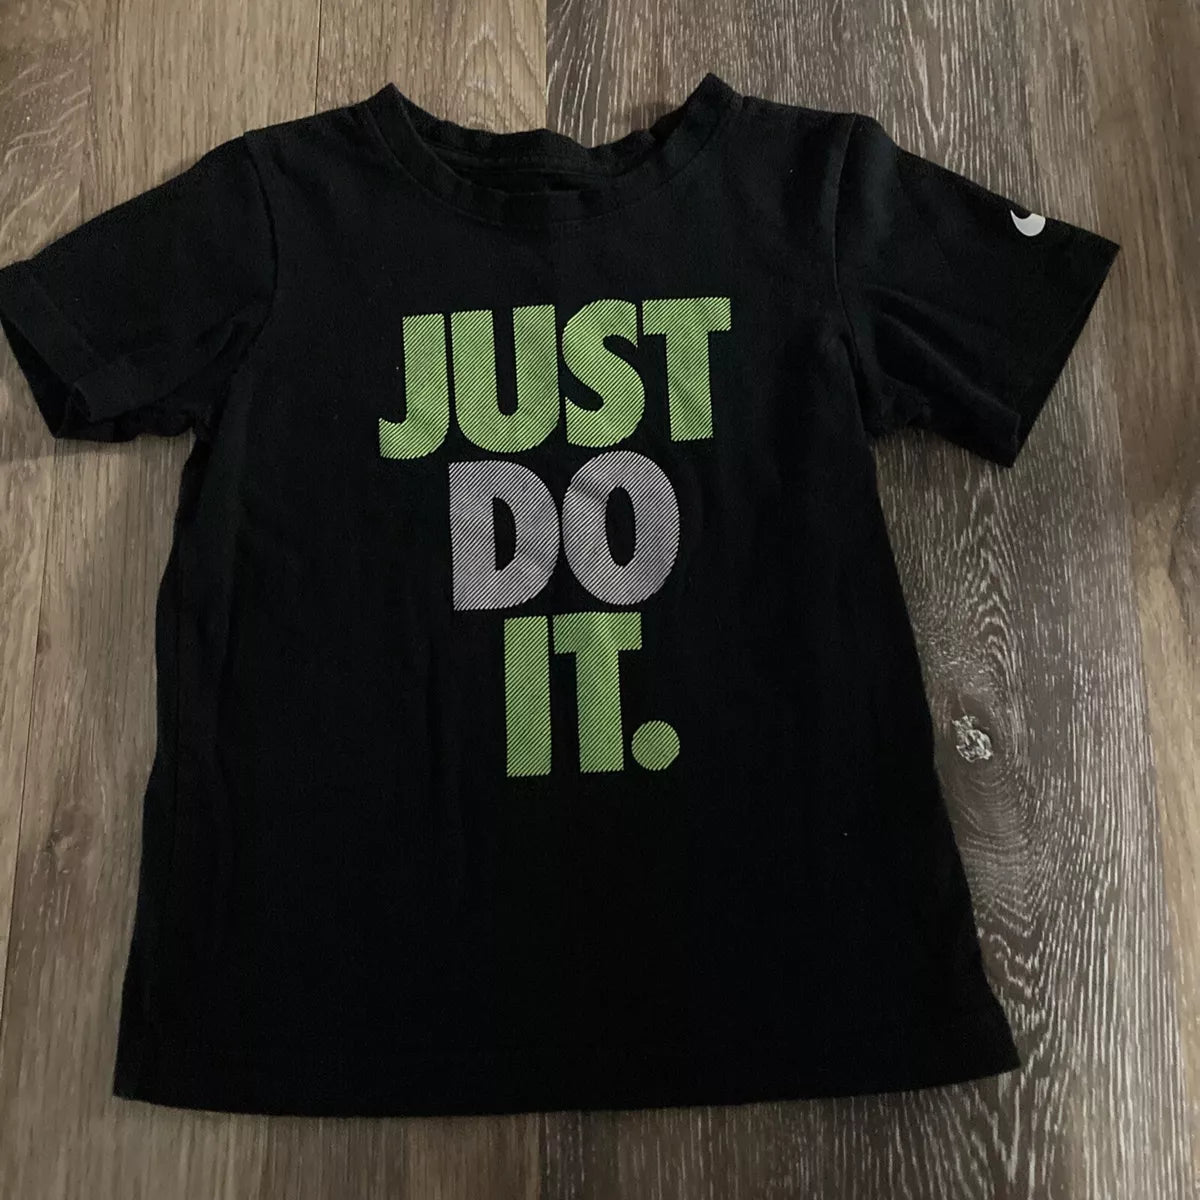 Nike kids shirt